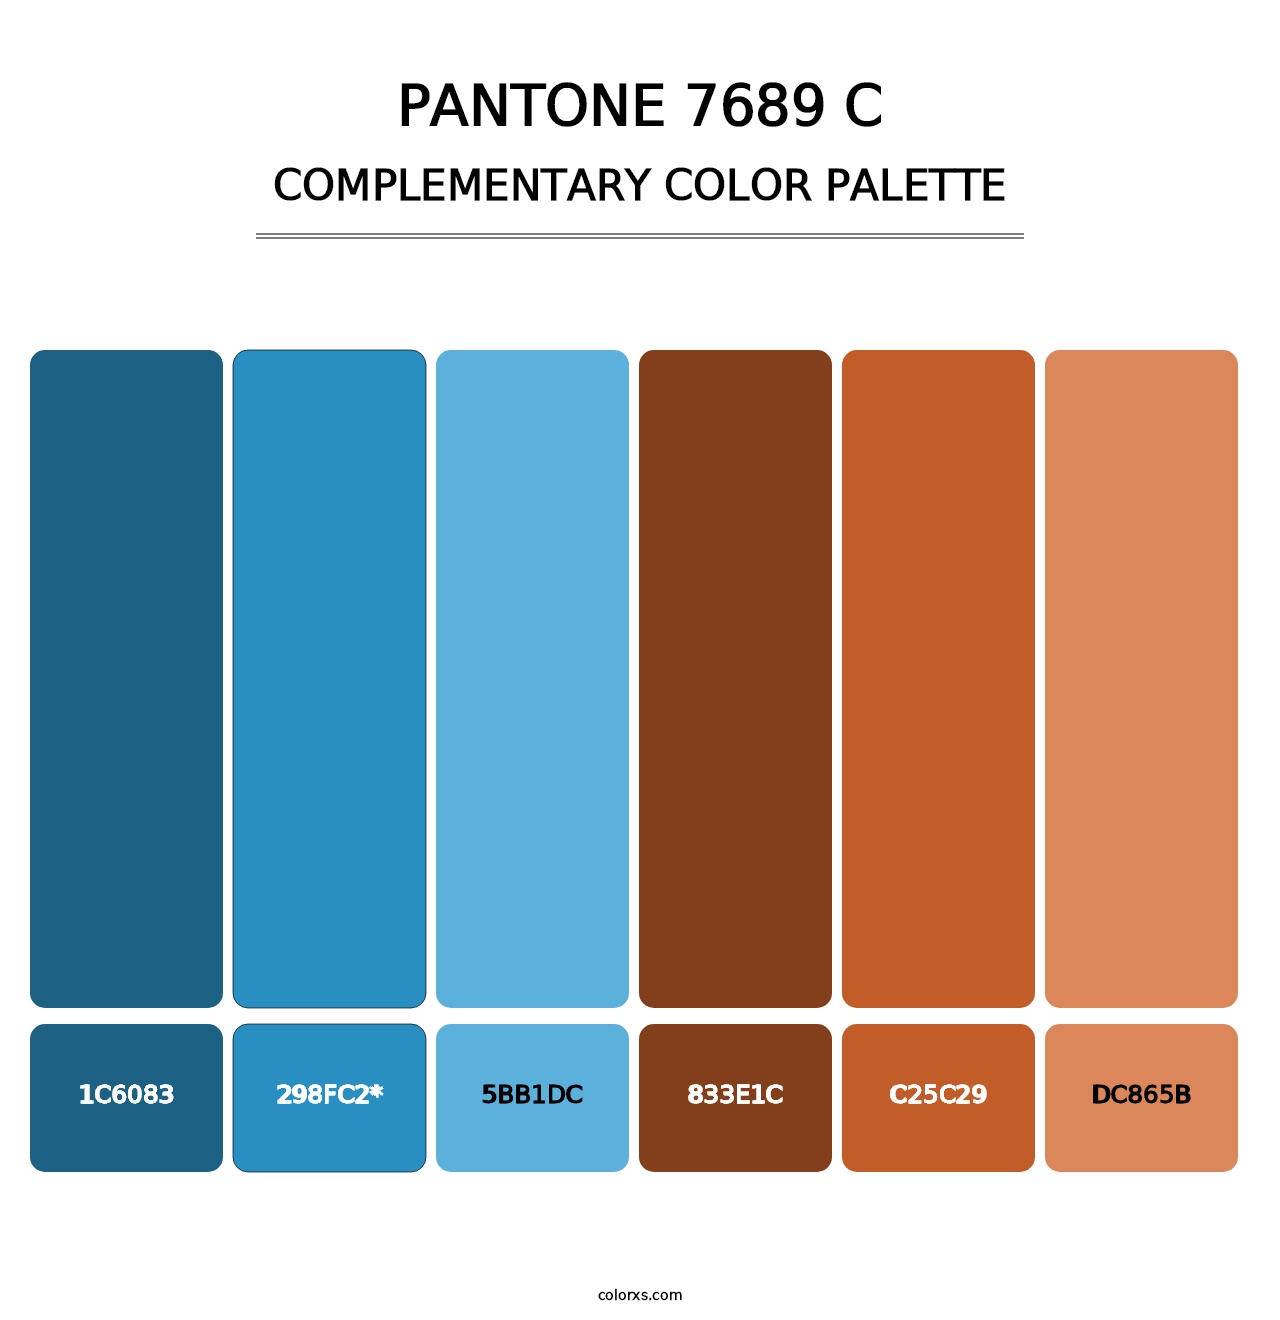 PANTONE 7689 C - Complementary Color Palette